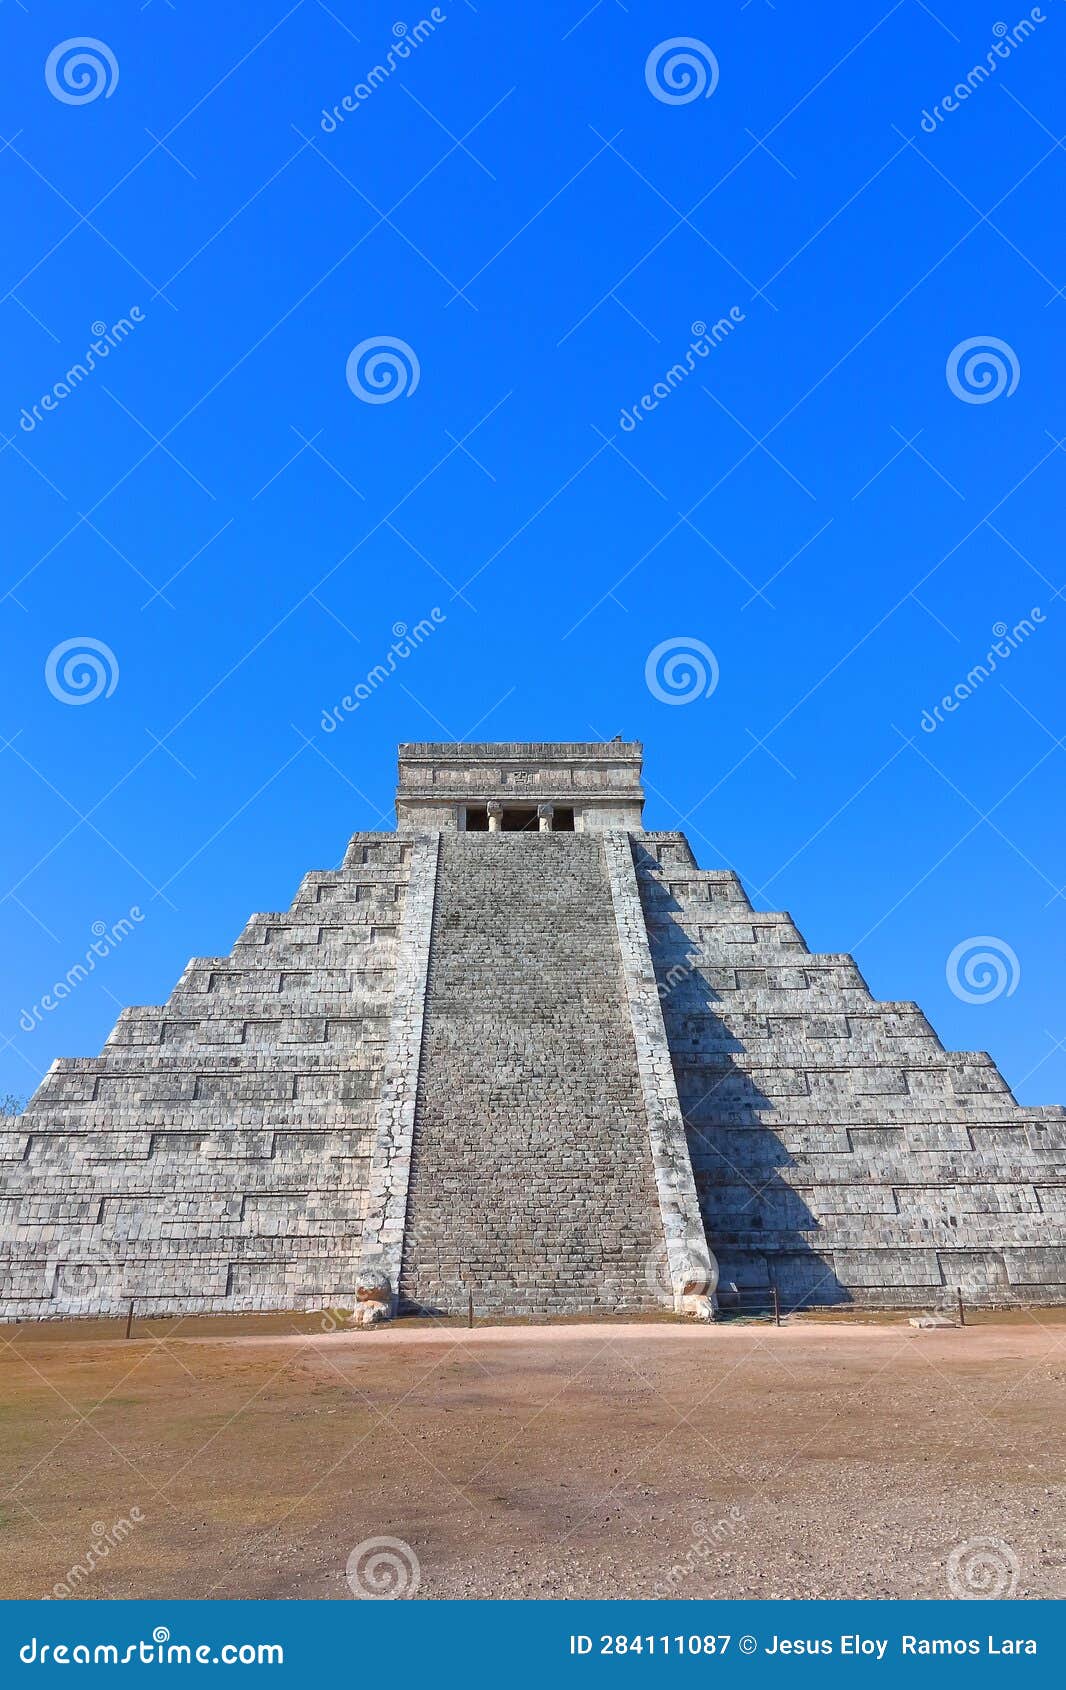 kukulcan temple in chichenitza, yucatan, mexico ii